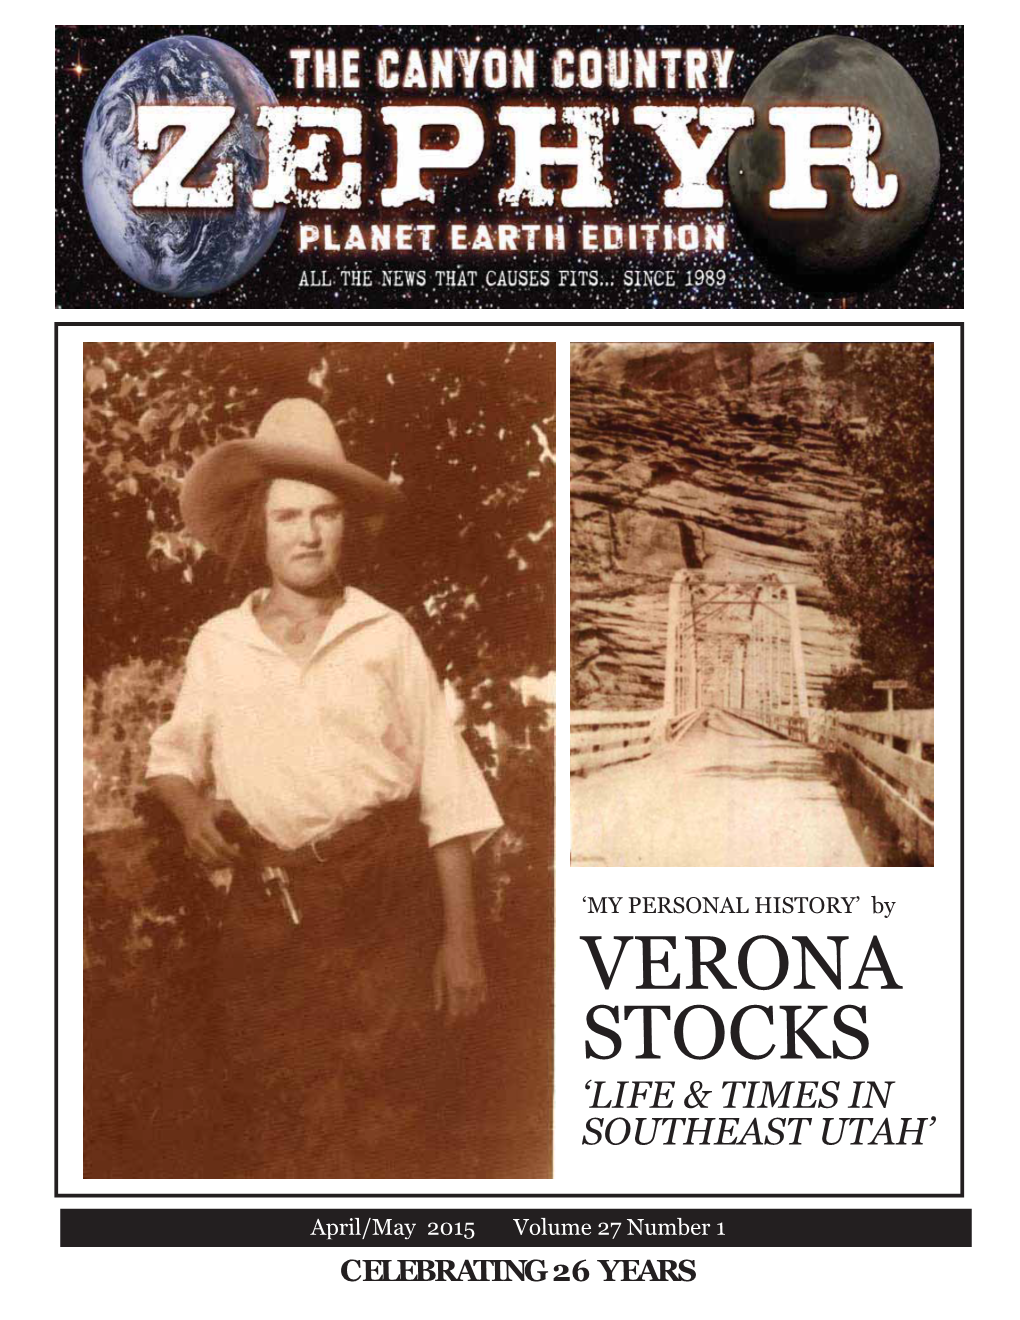 Verona Stocks ‘Life & Times in Southeast Utah’